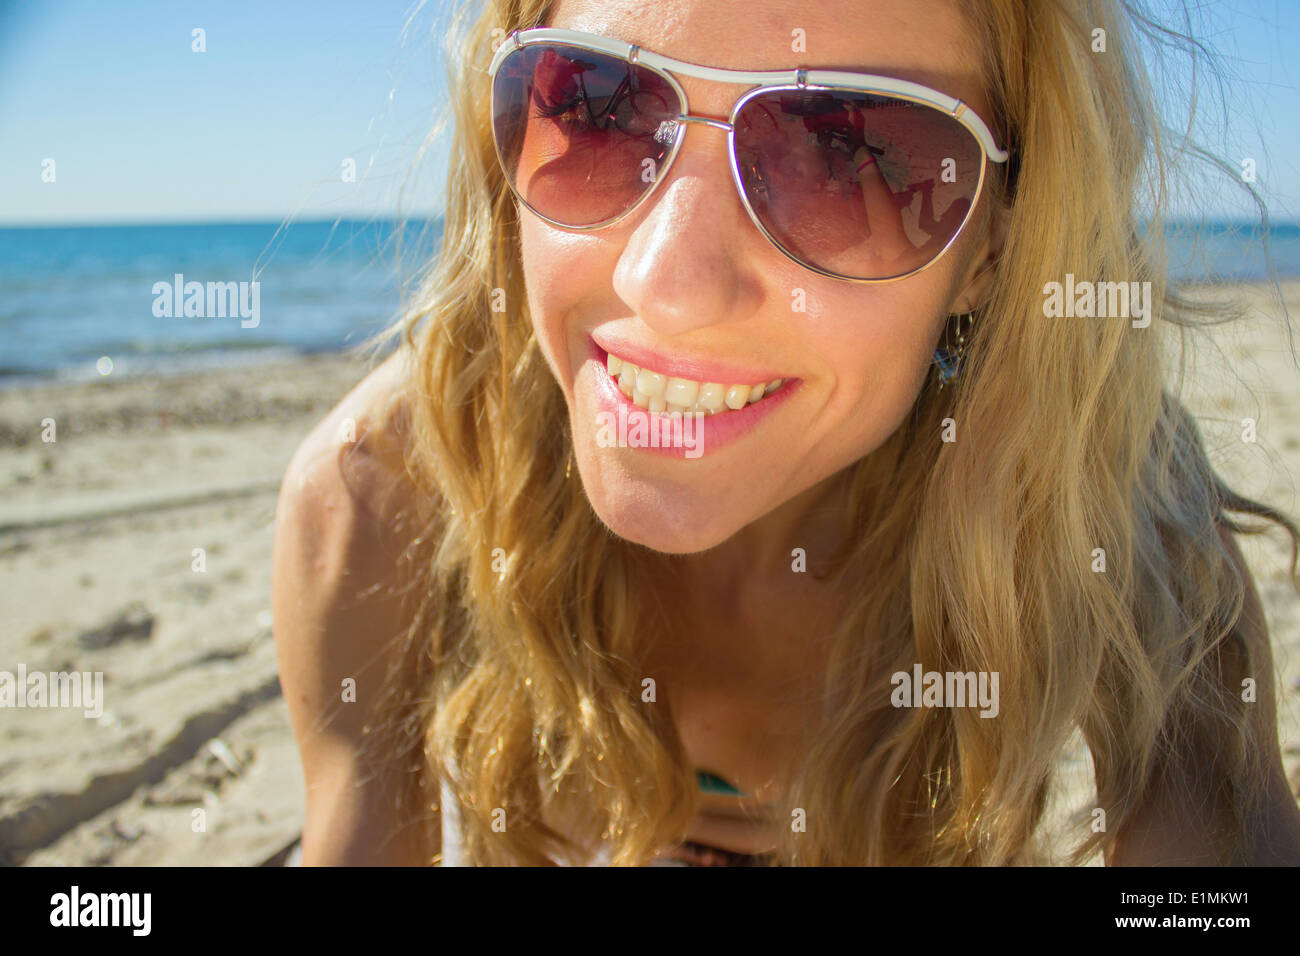 woman face beach sea sunglasses bright vivid pink holding sunglasses summer blond air blonde Stock Photo